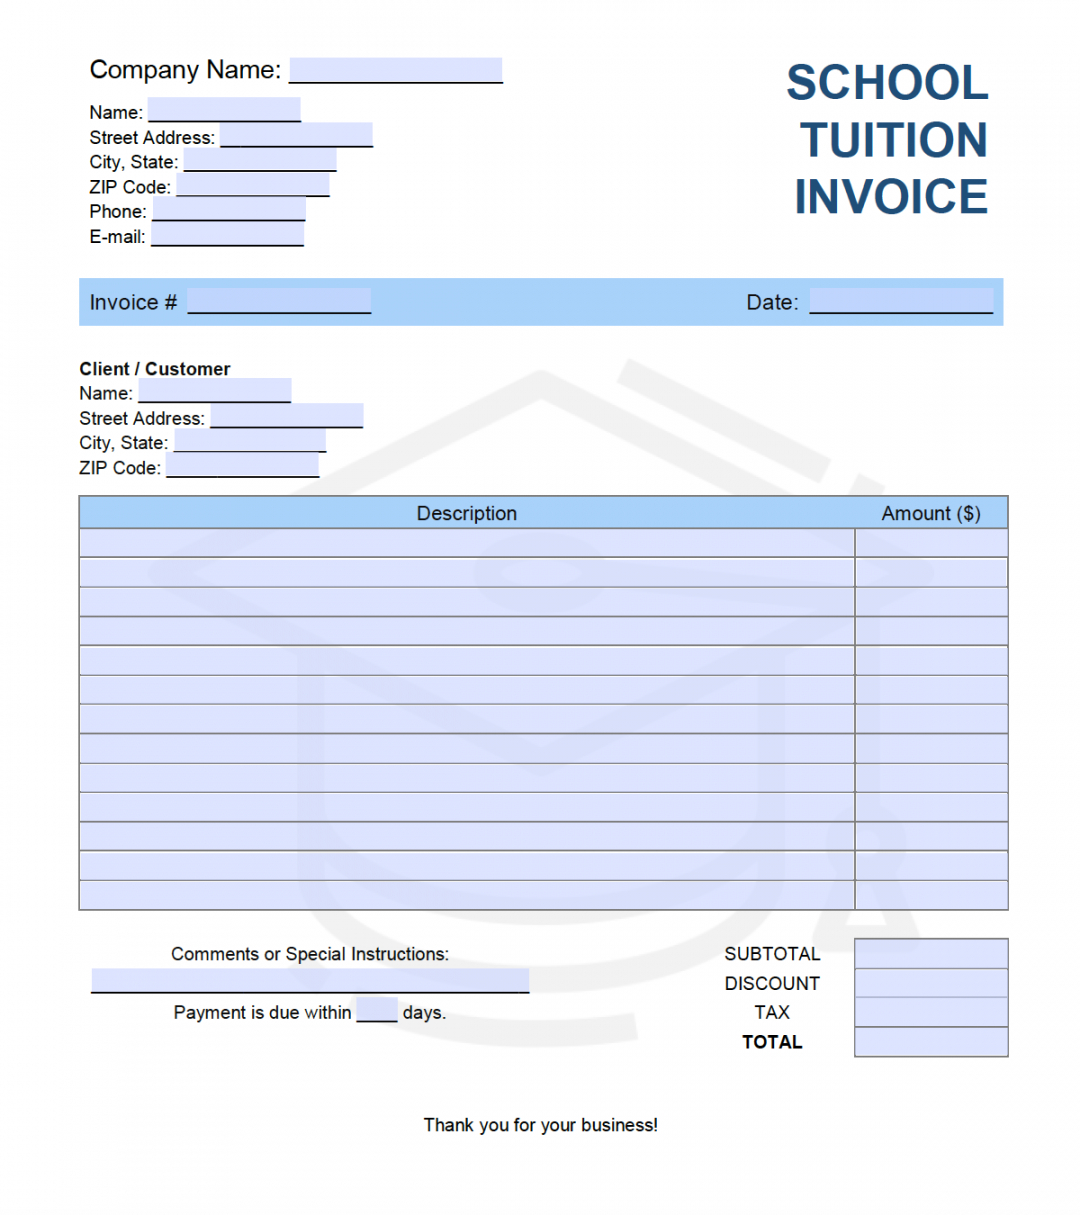 school-tuition-receipt-template-emetonlineblog